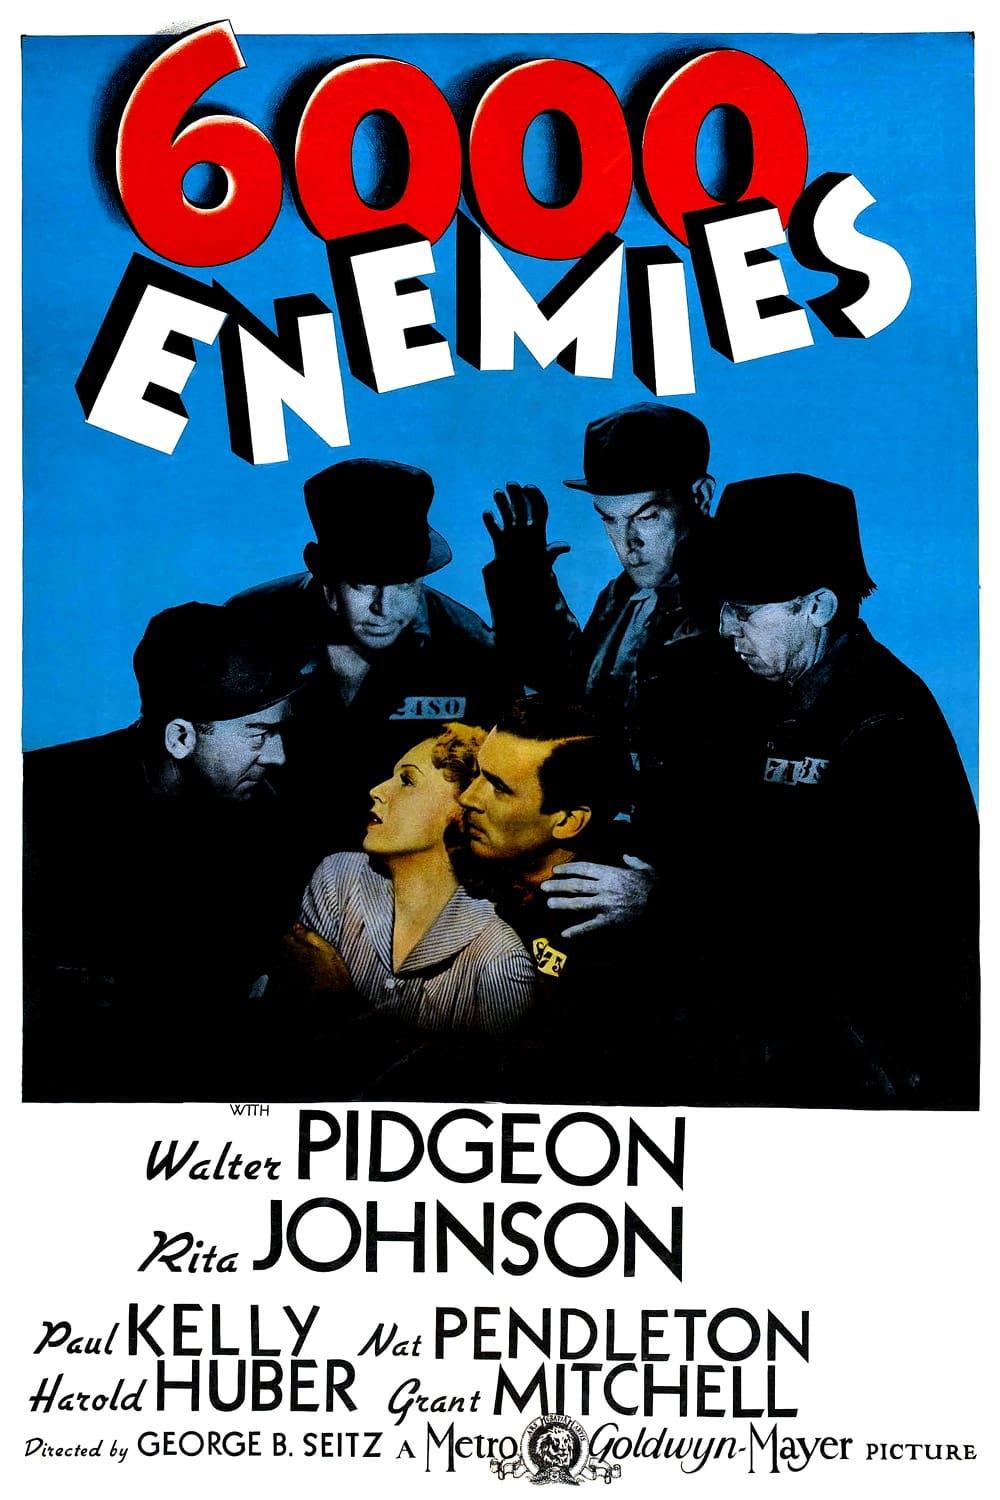 6,000 Enemies poster